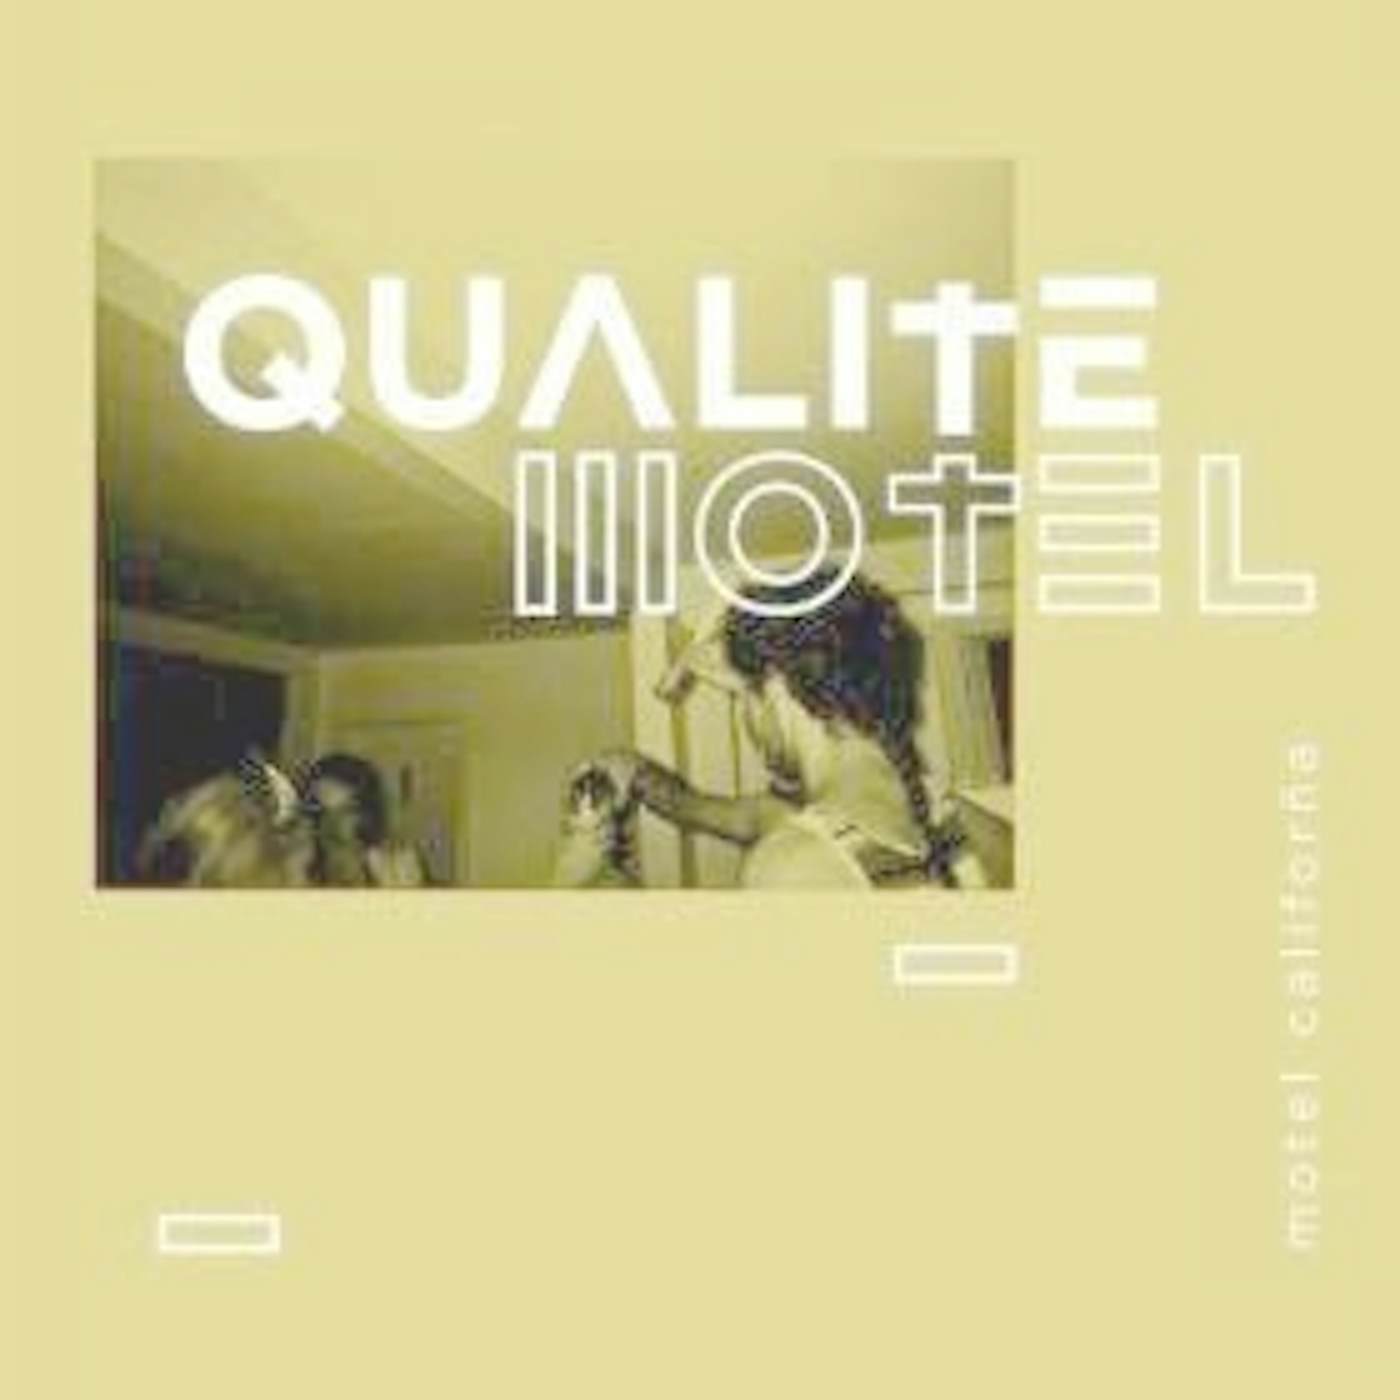 Qualité Motel MOTEL CALIFORNIA Vinyl Record